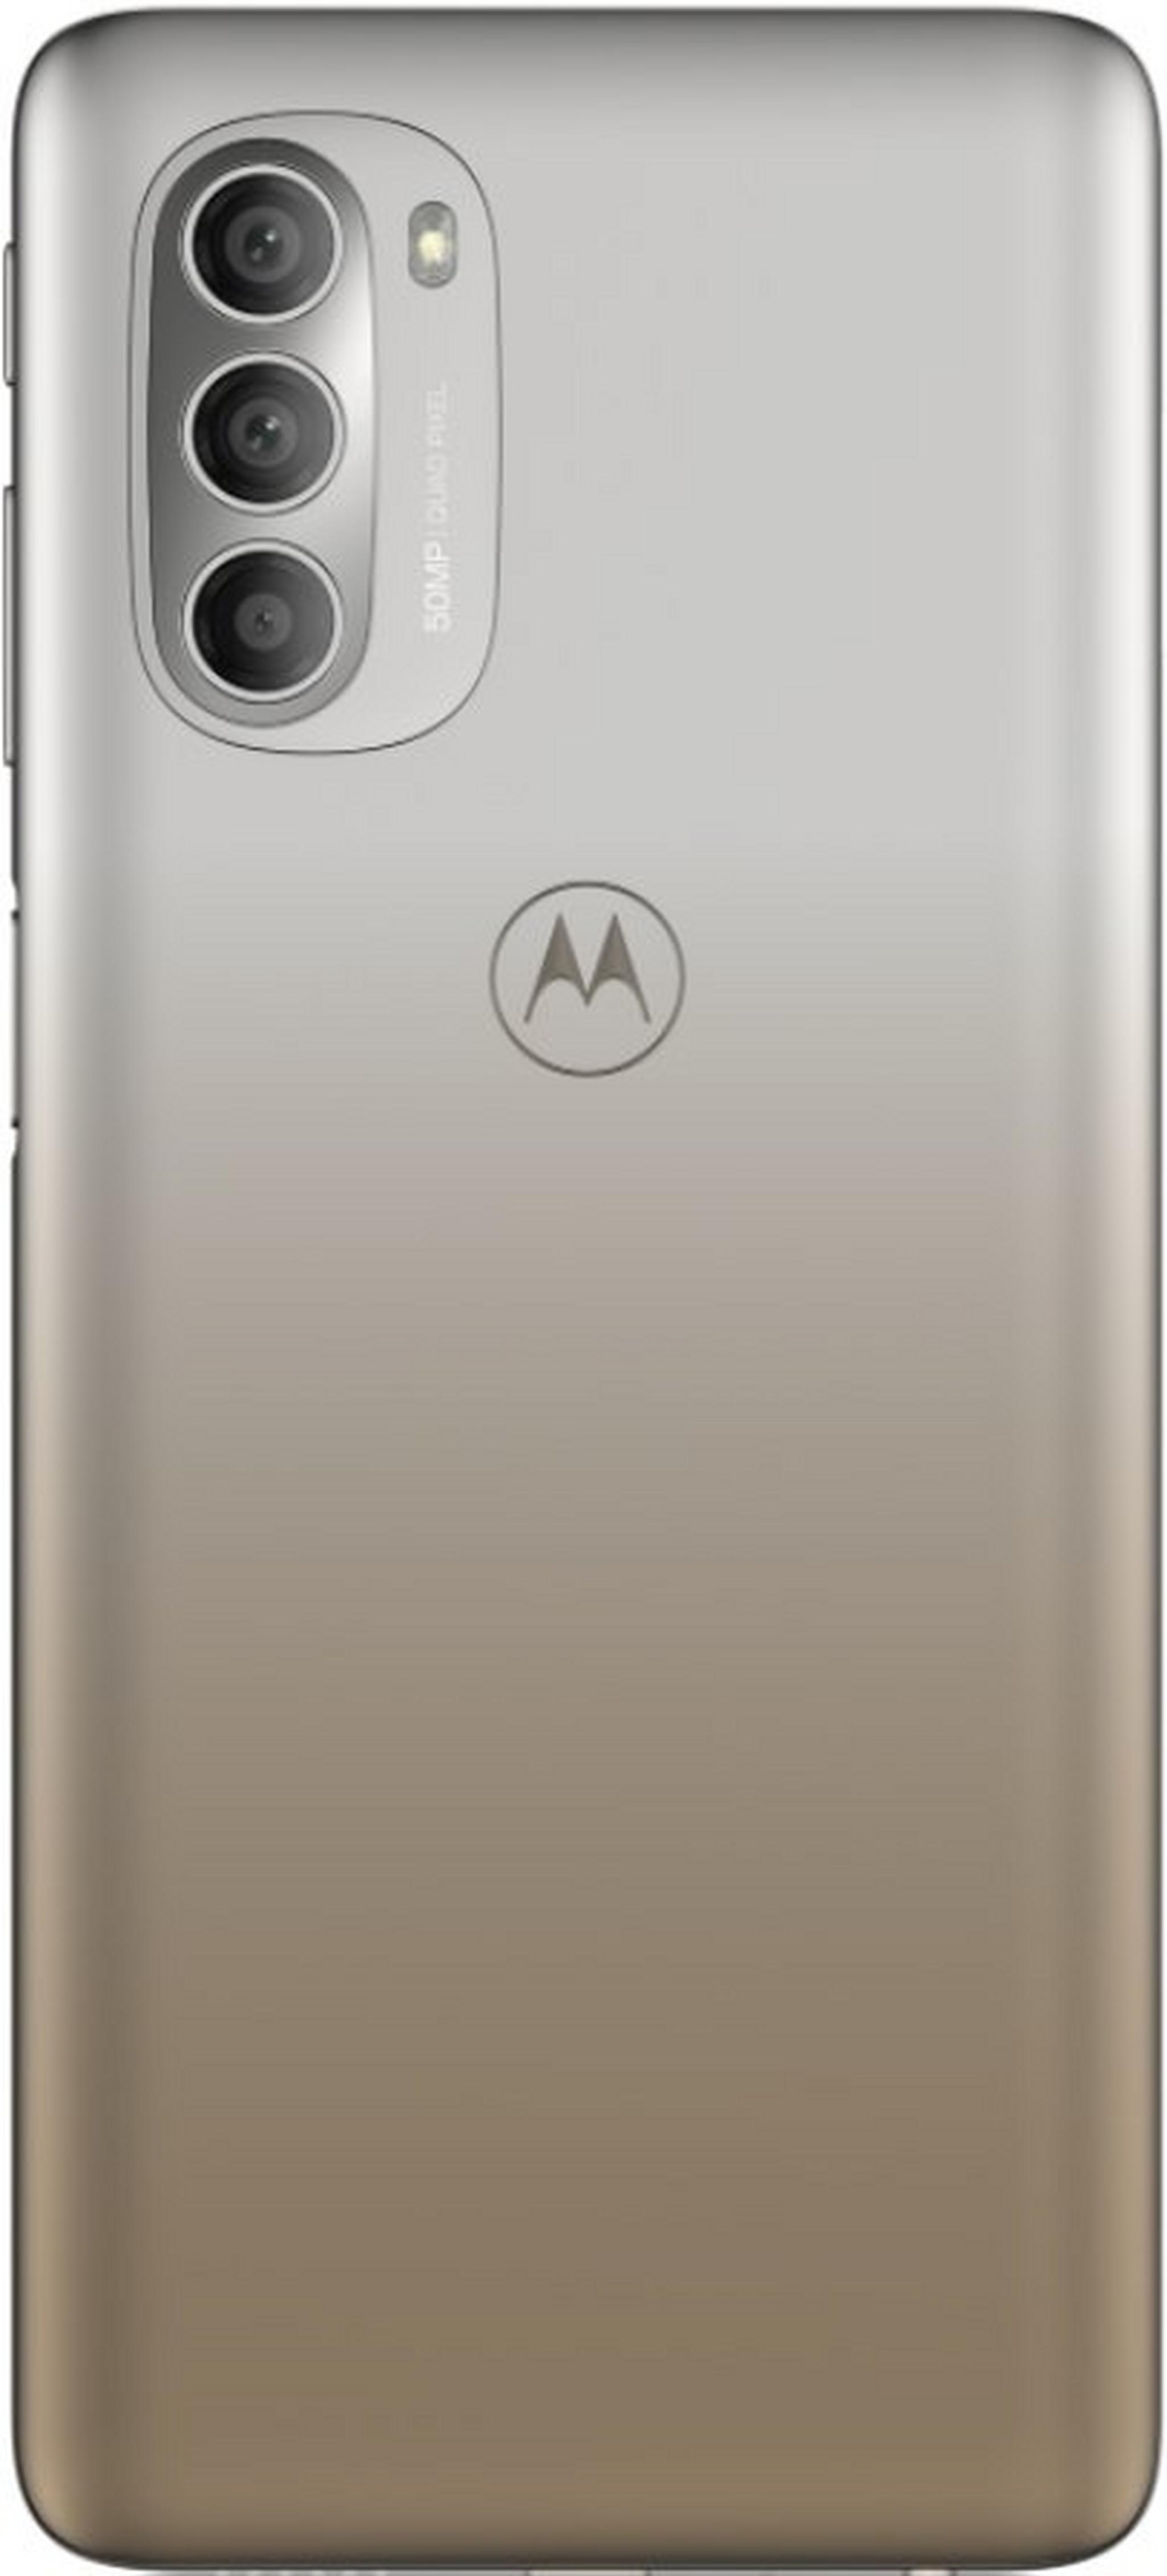 Motorola Moto G51 128GB Phone - Silver